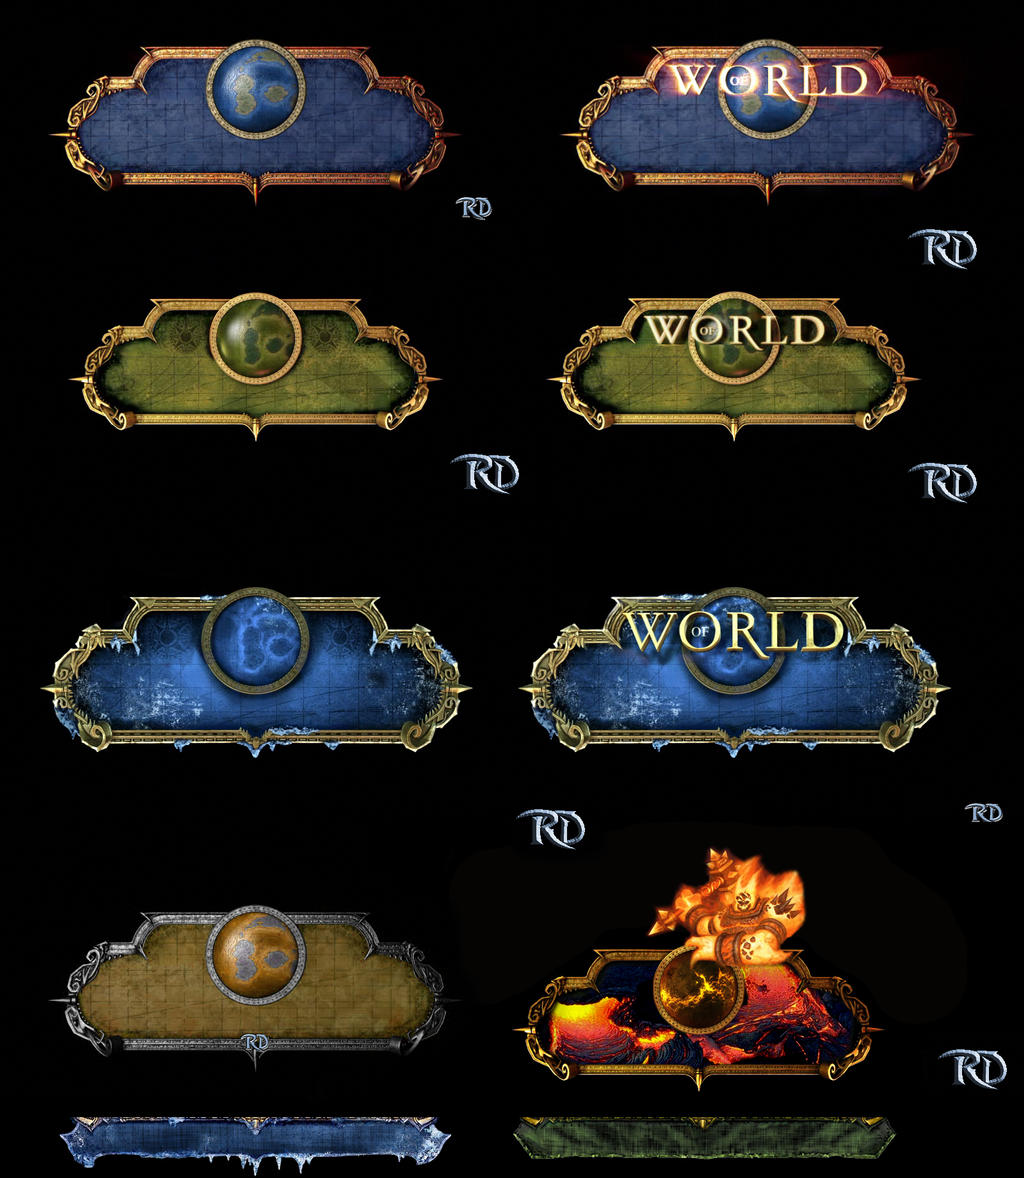 World Of Warcraft Logo Font